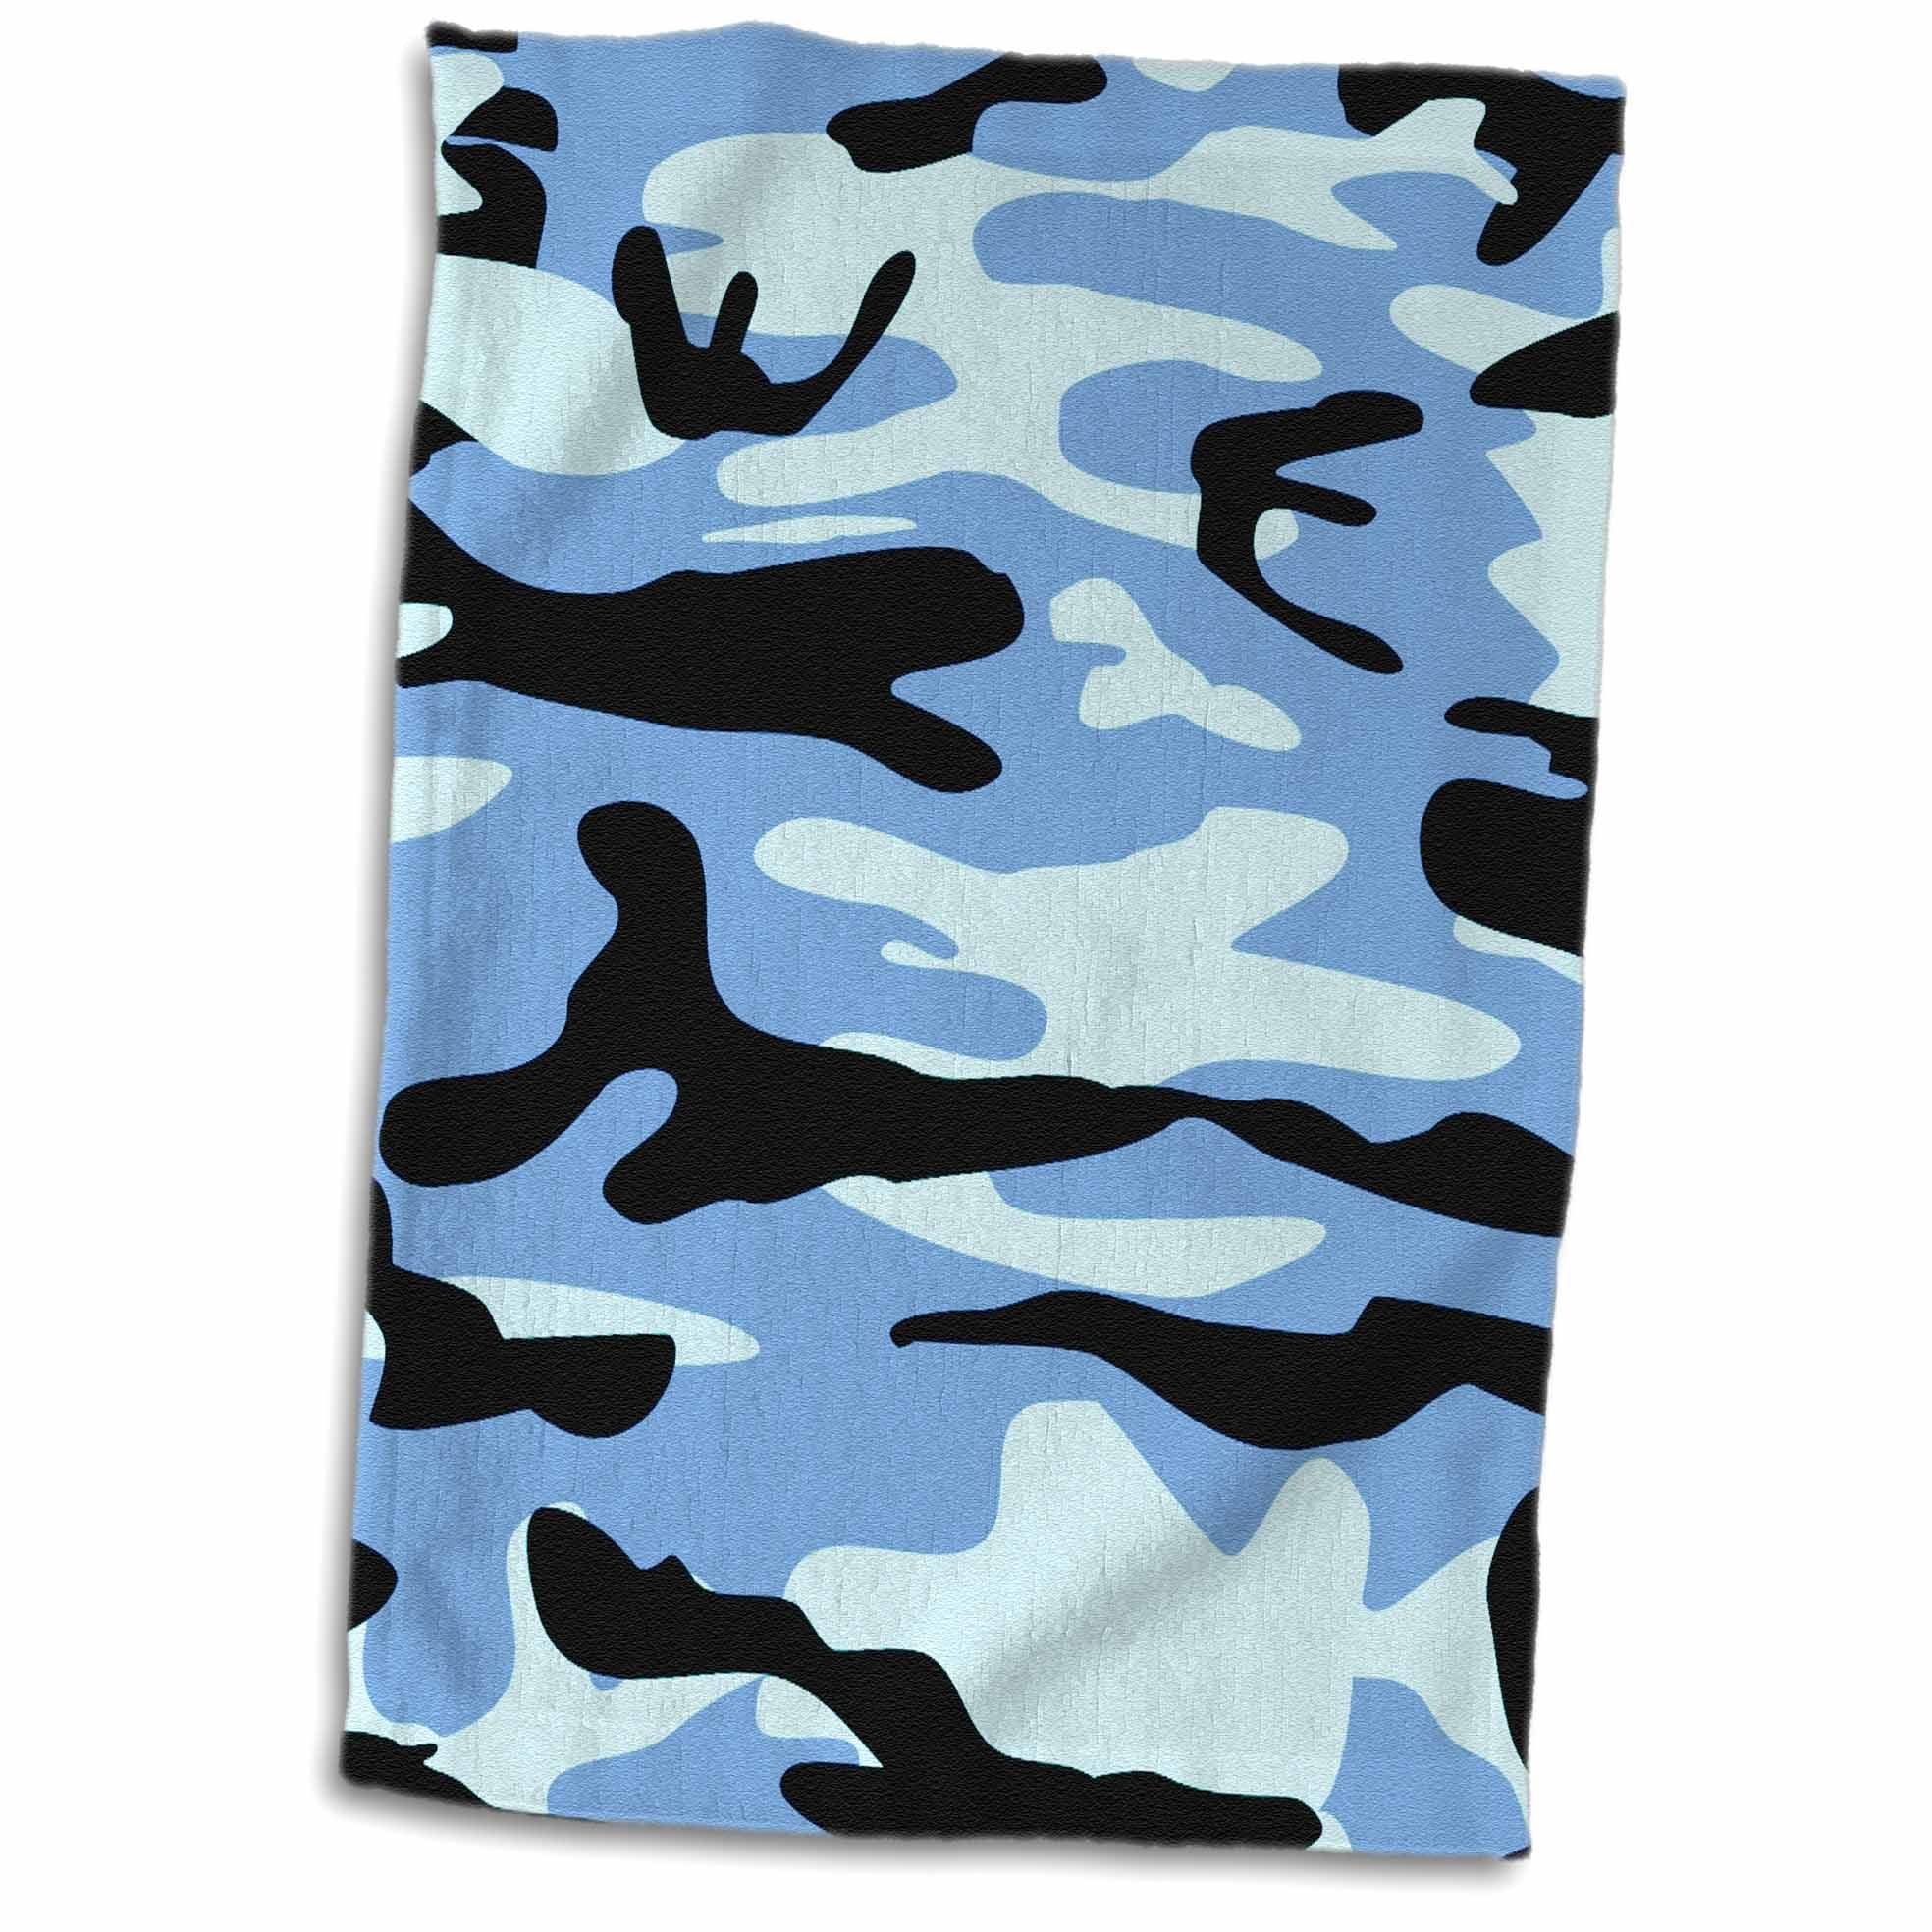 3dRose Light blue camo print - army uniform camouflage pattern - macho ...